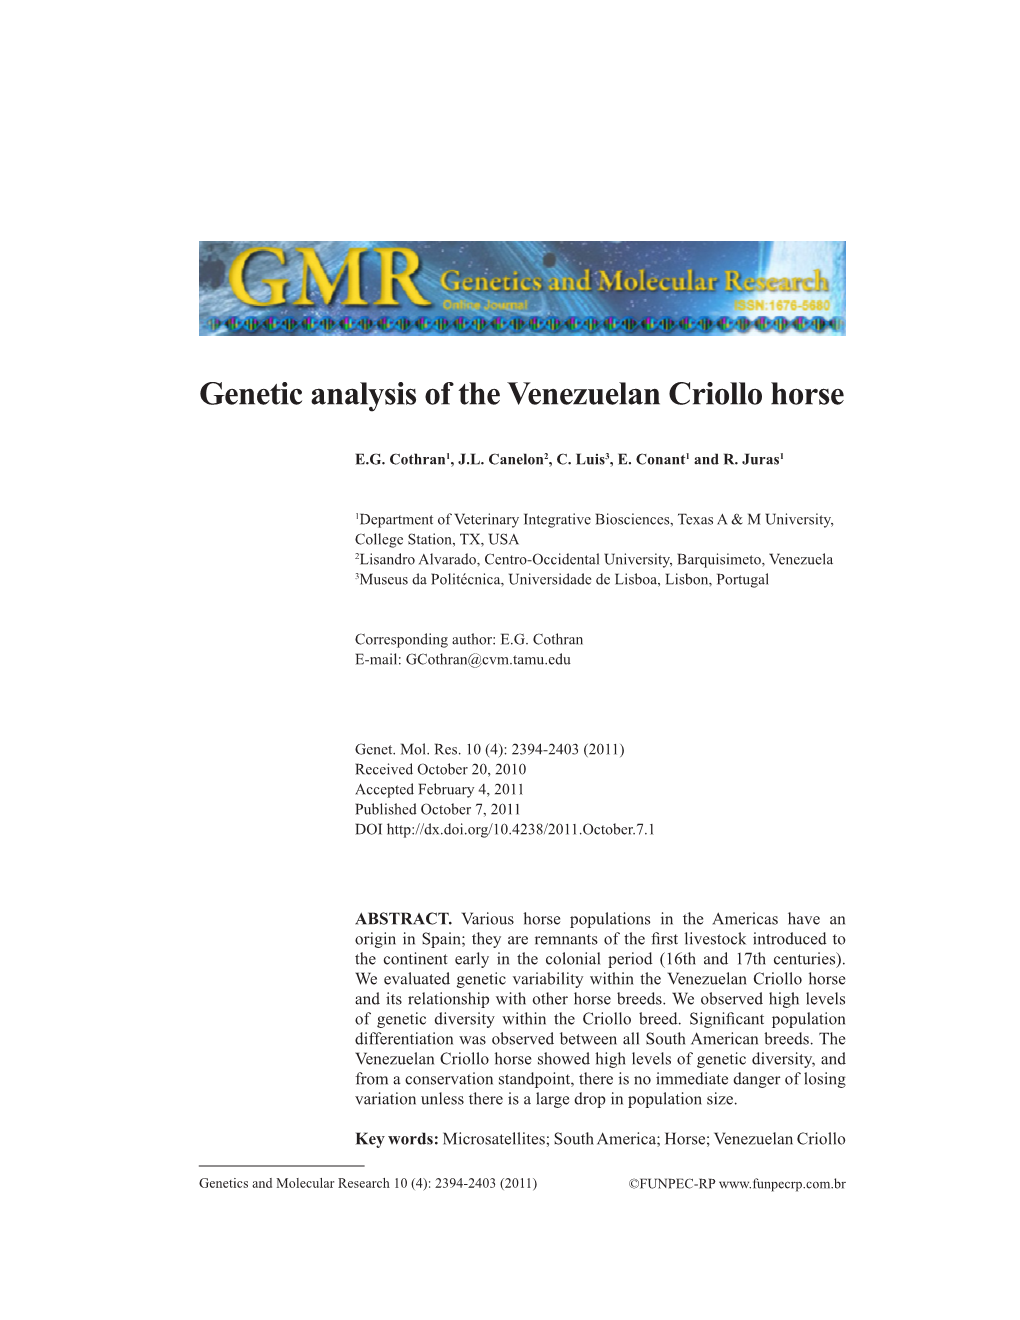 Genetic Analysis of the Venezuelan Criollo Horse